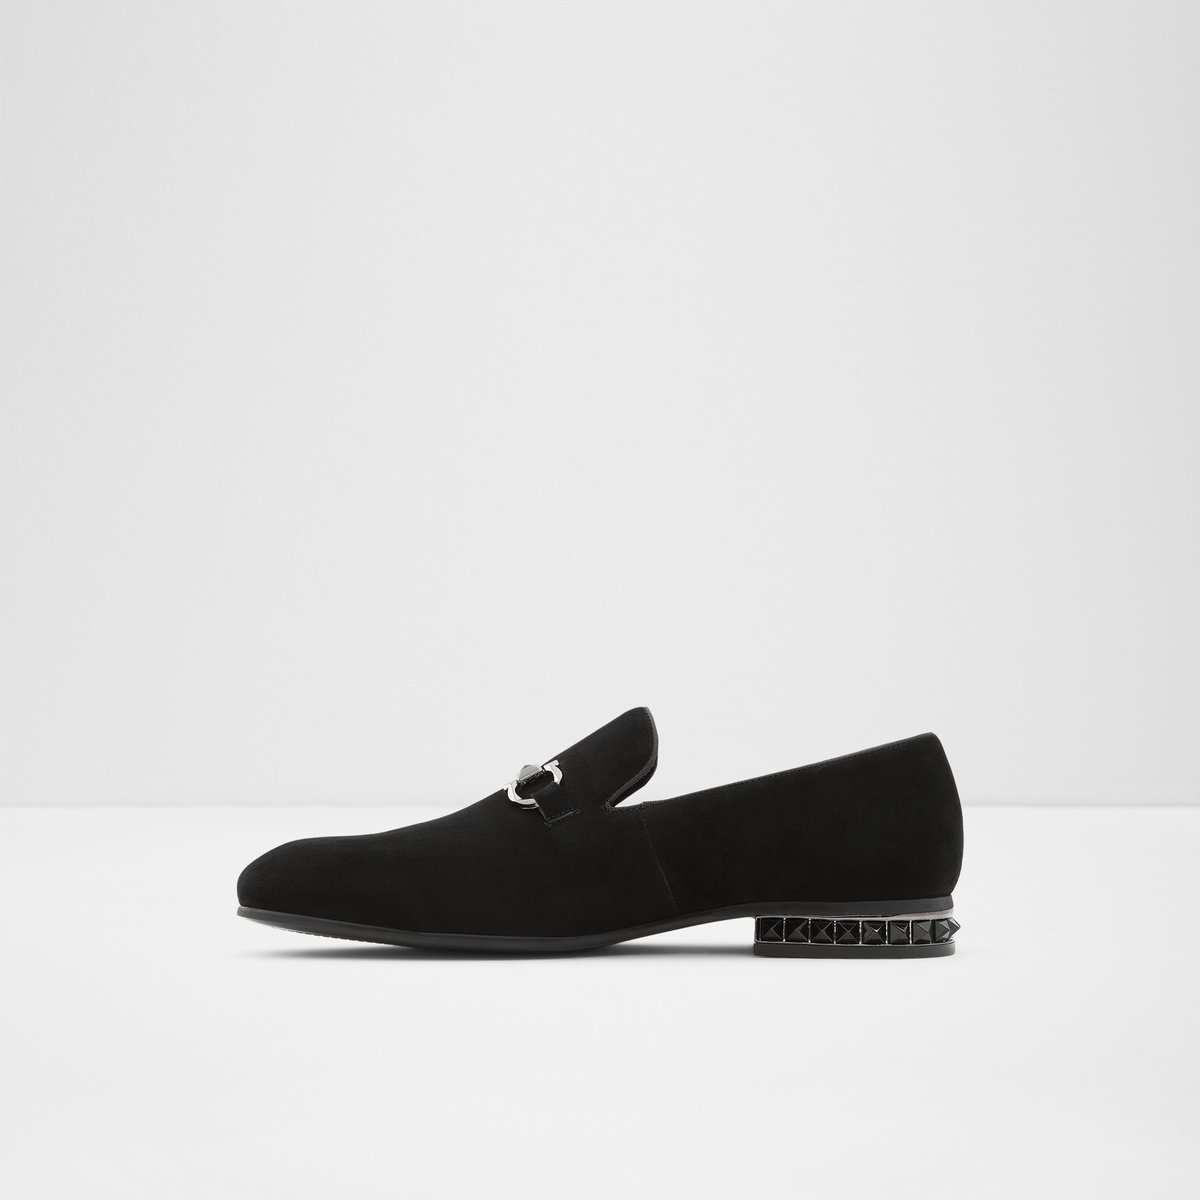 Bowtie Black Men's Loafers & Slip-Ons | ALDO Canada